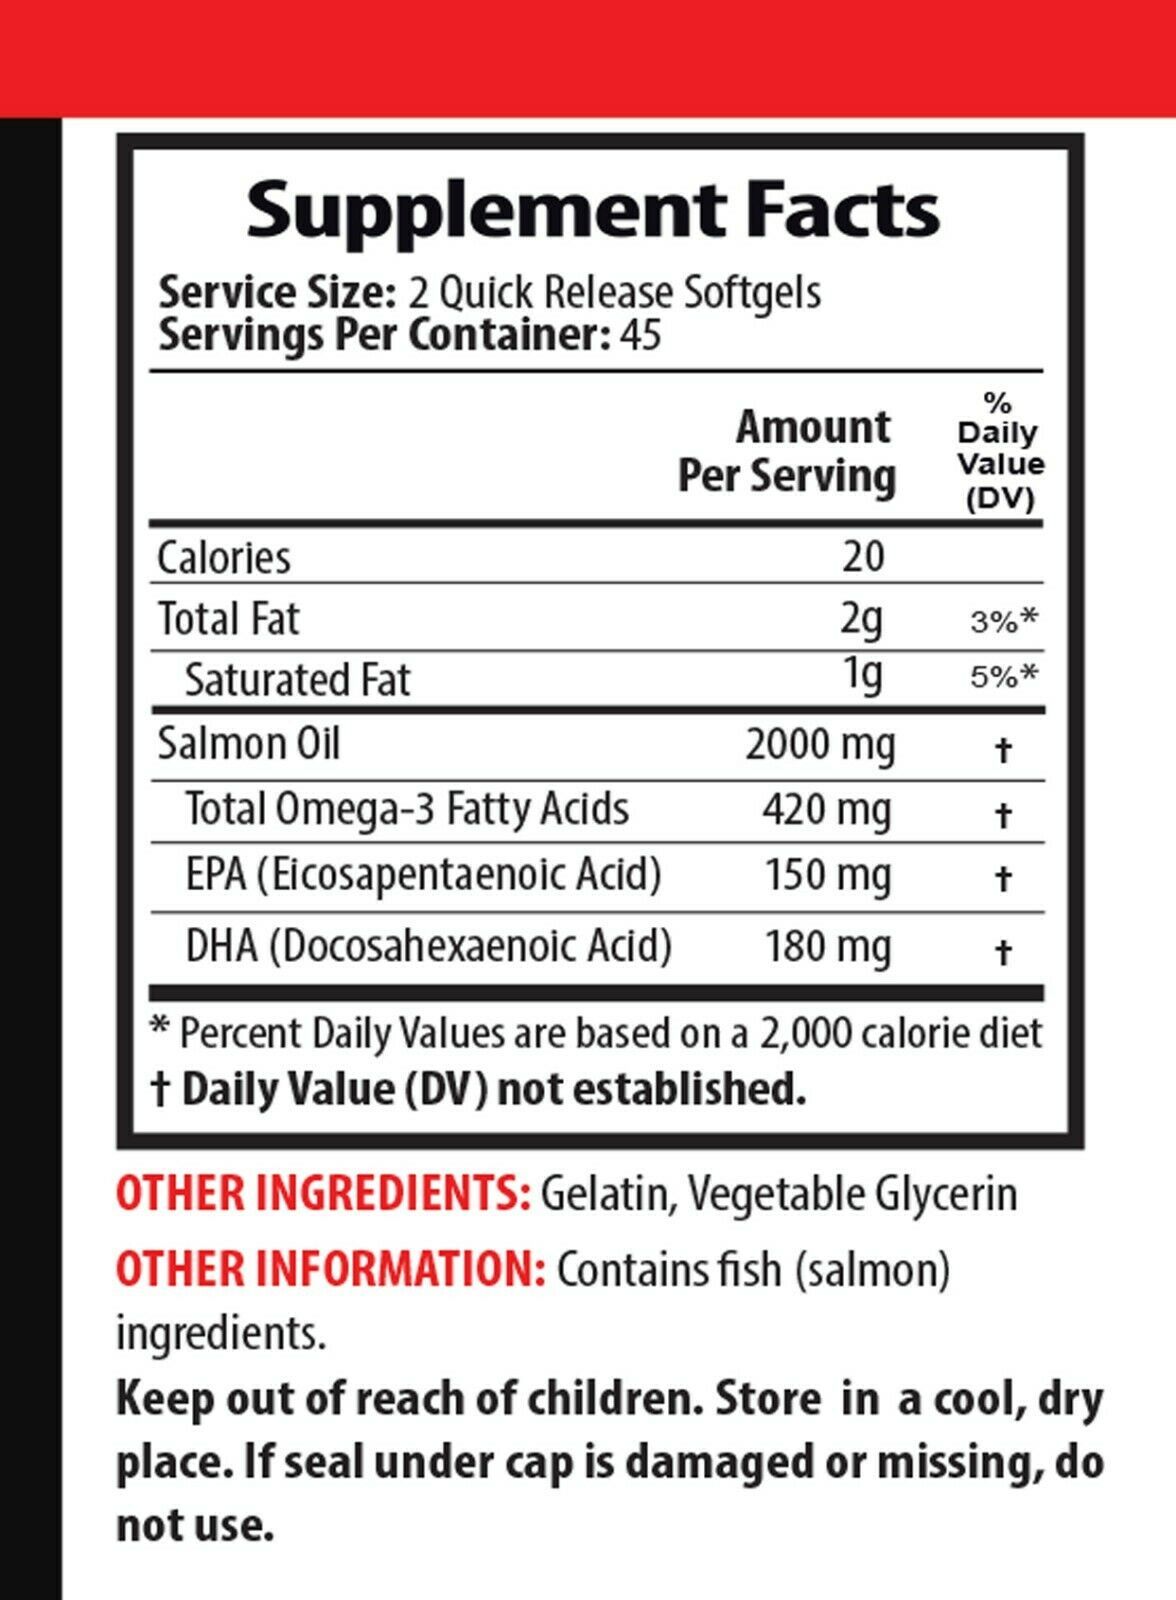 fish oil antioxidants - WILD SALMON OIL 2000mg - EPA and DHA fatty ...